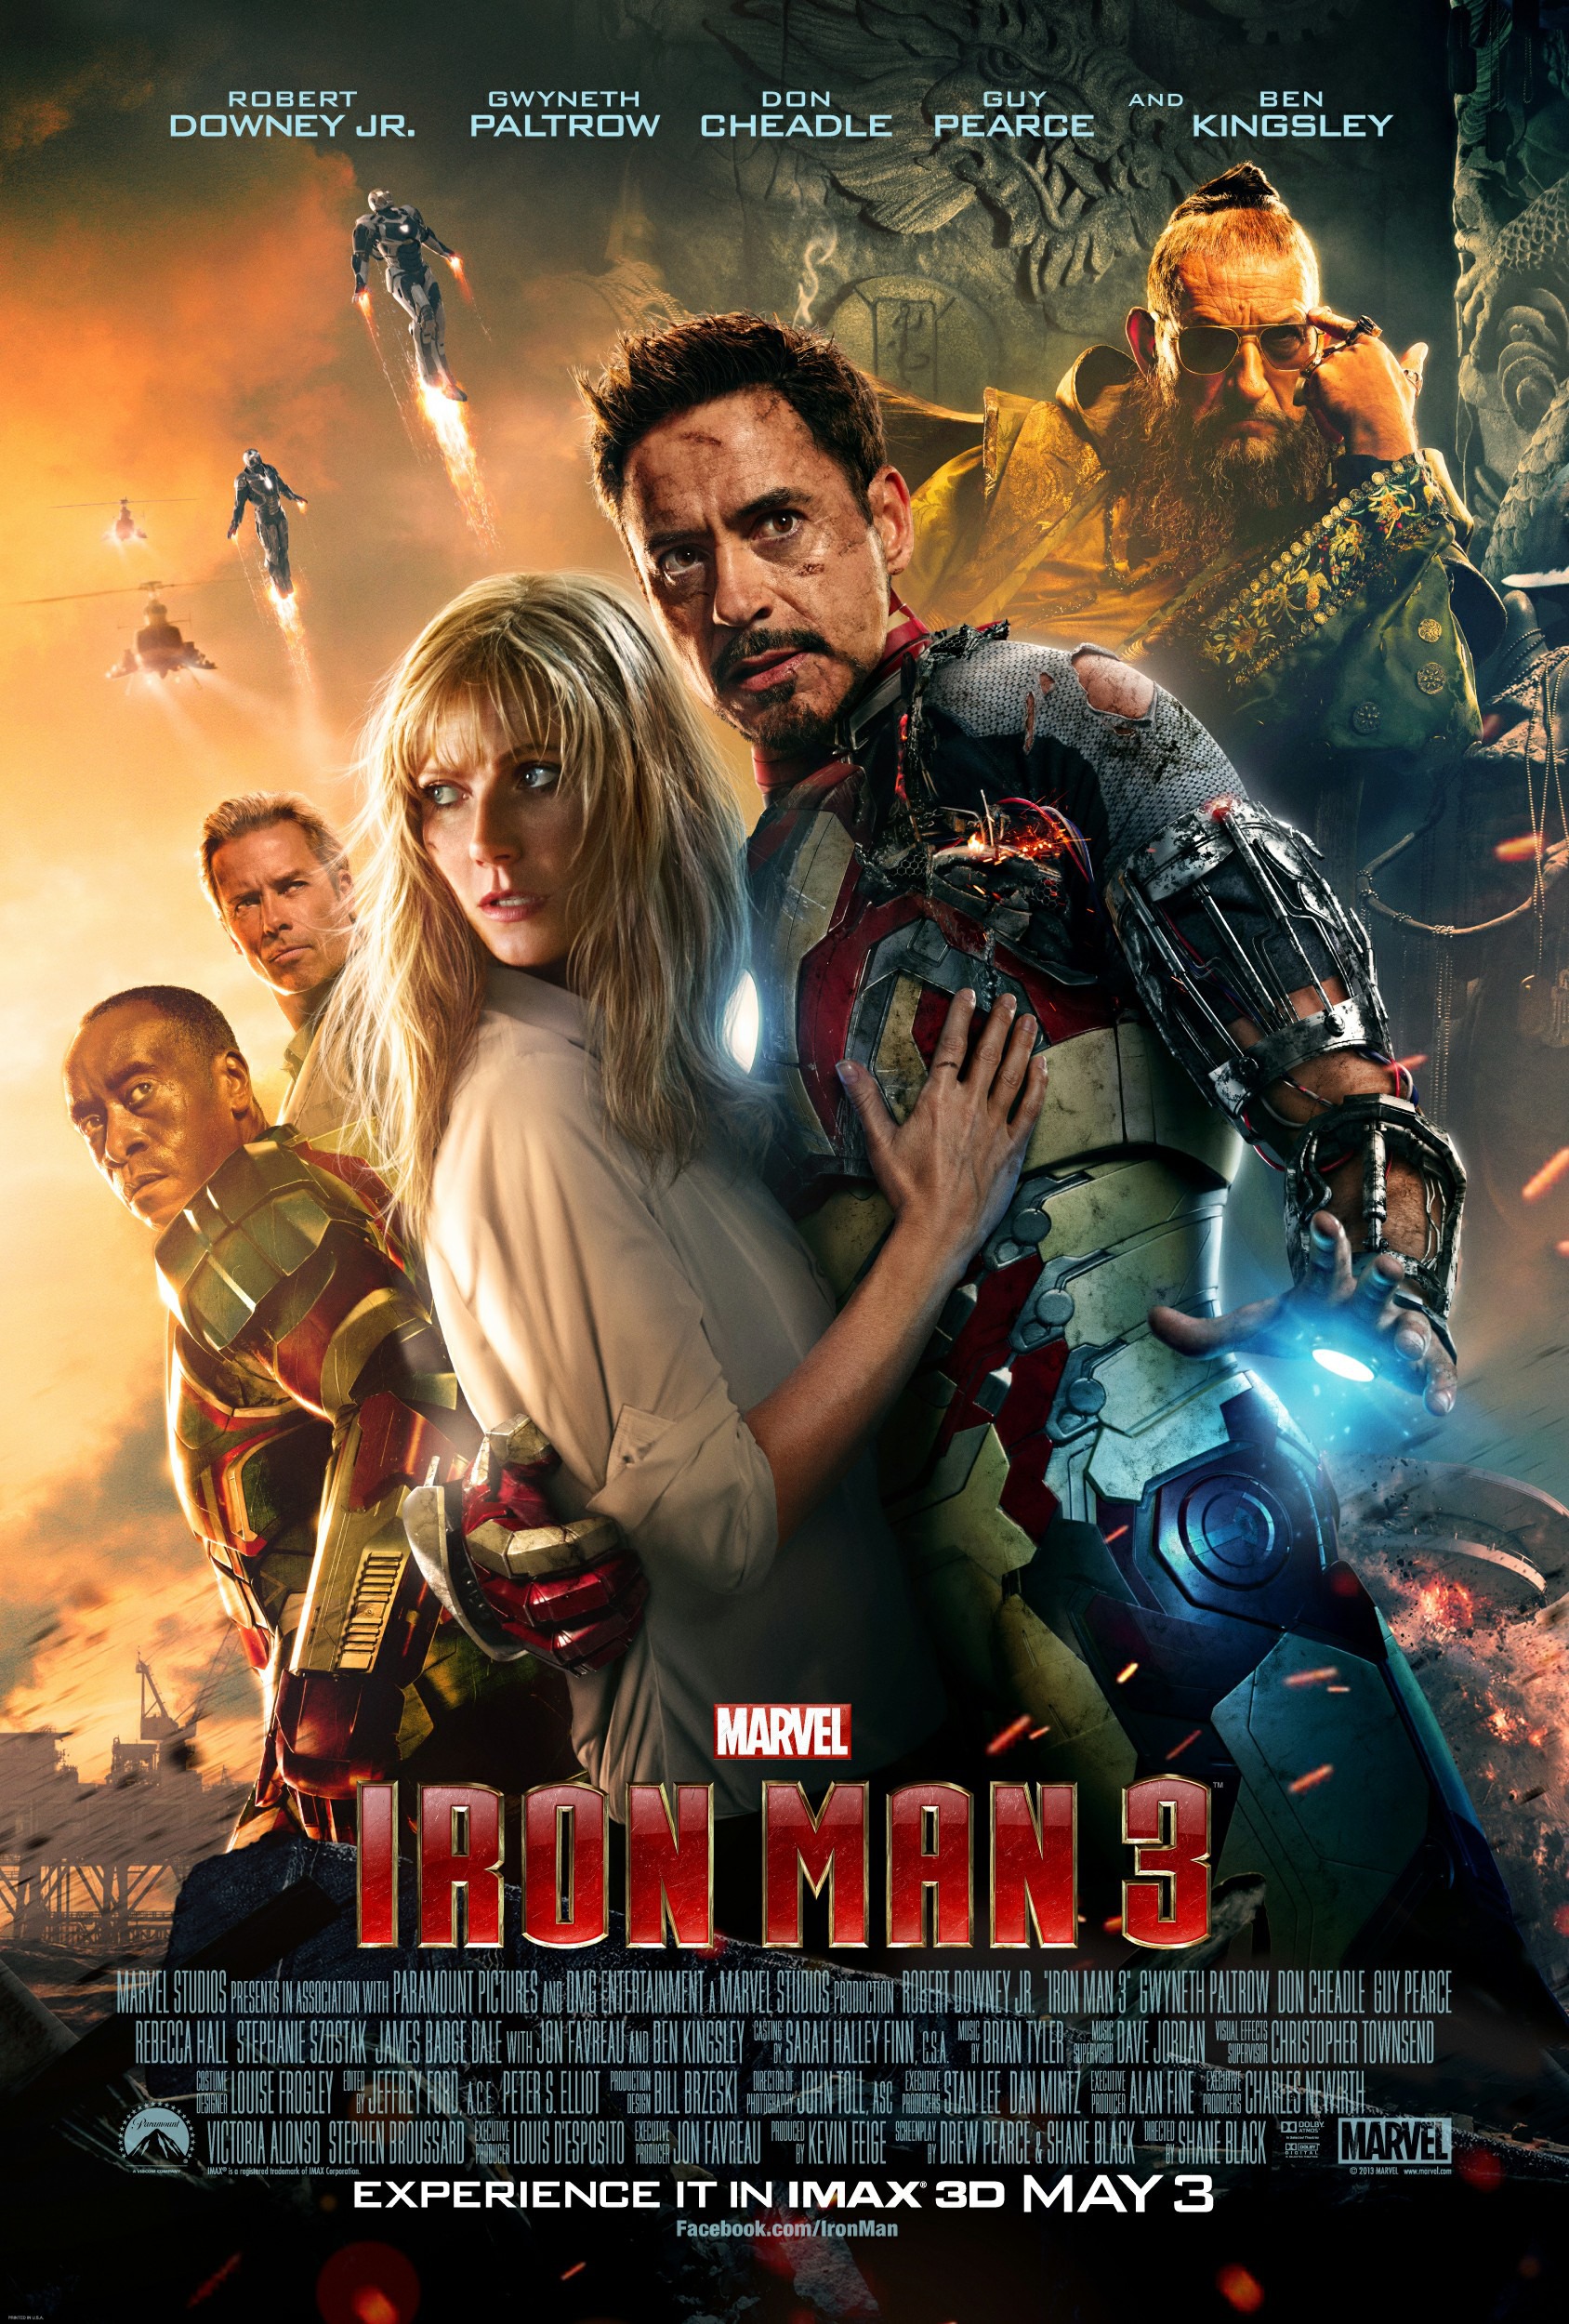 Mega Sized Movie Poster Image for Iron Man 3 (#11 of 12)